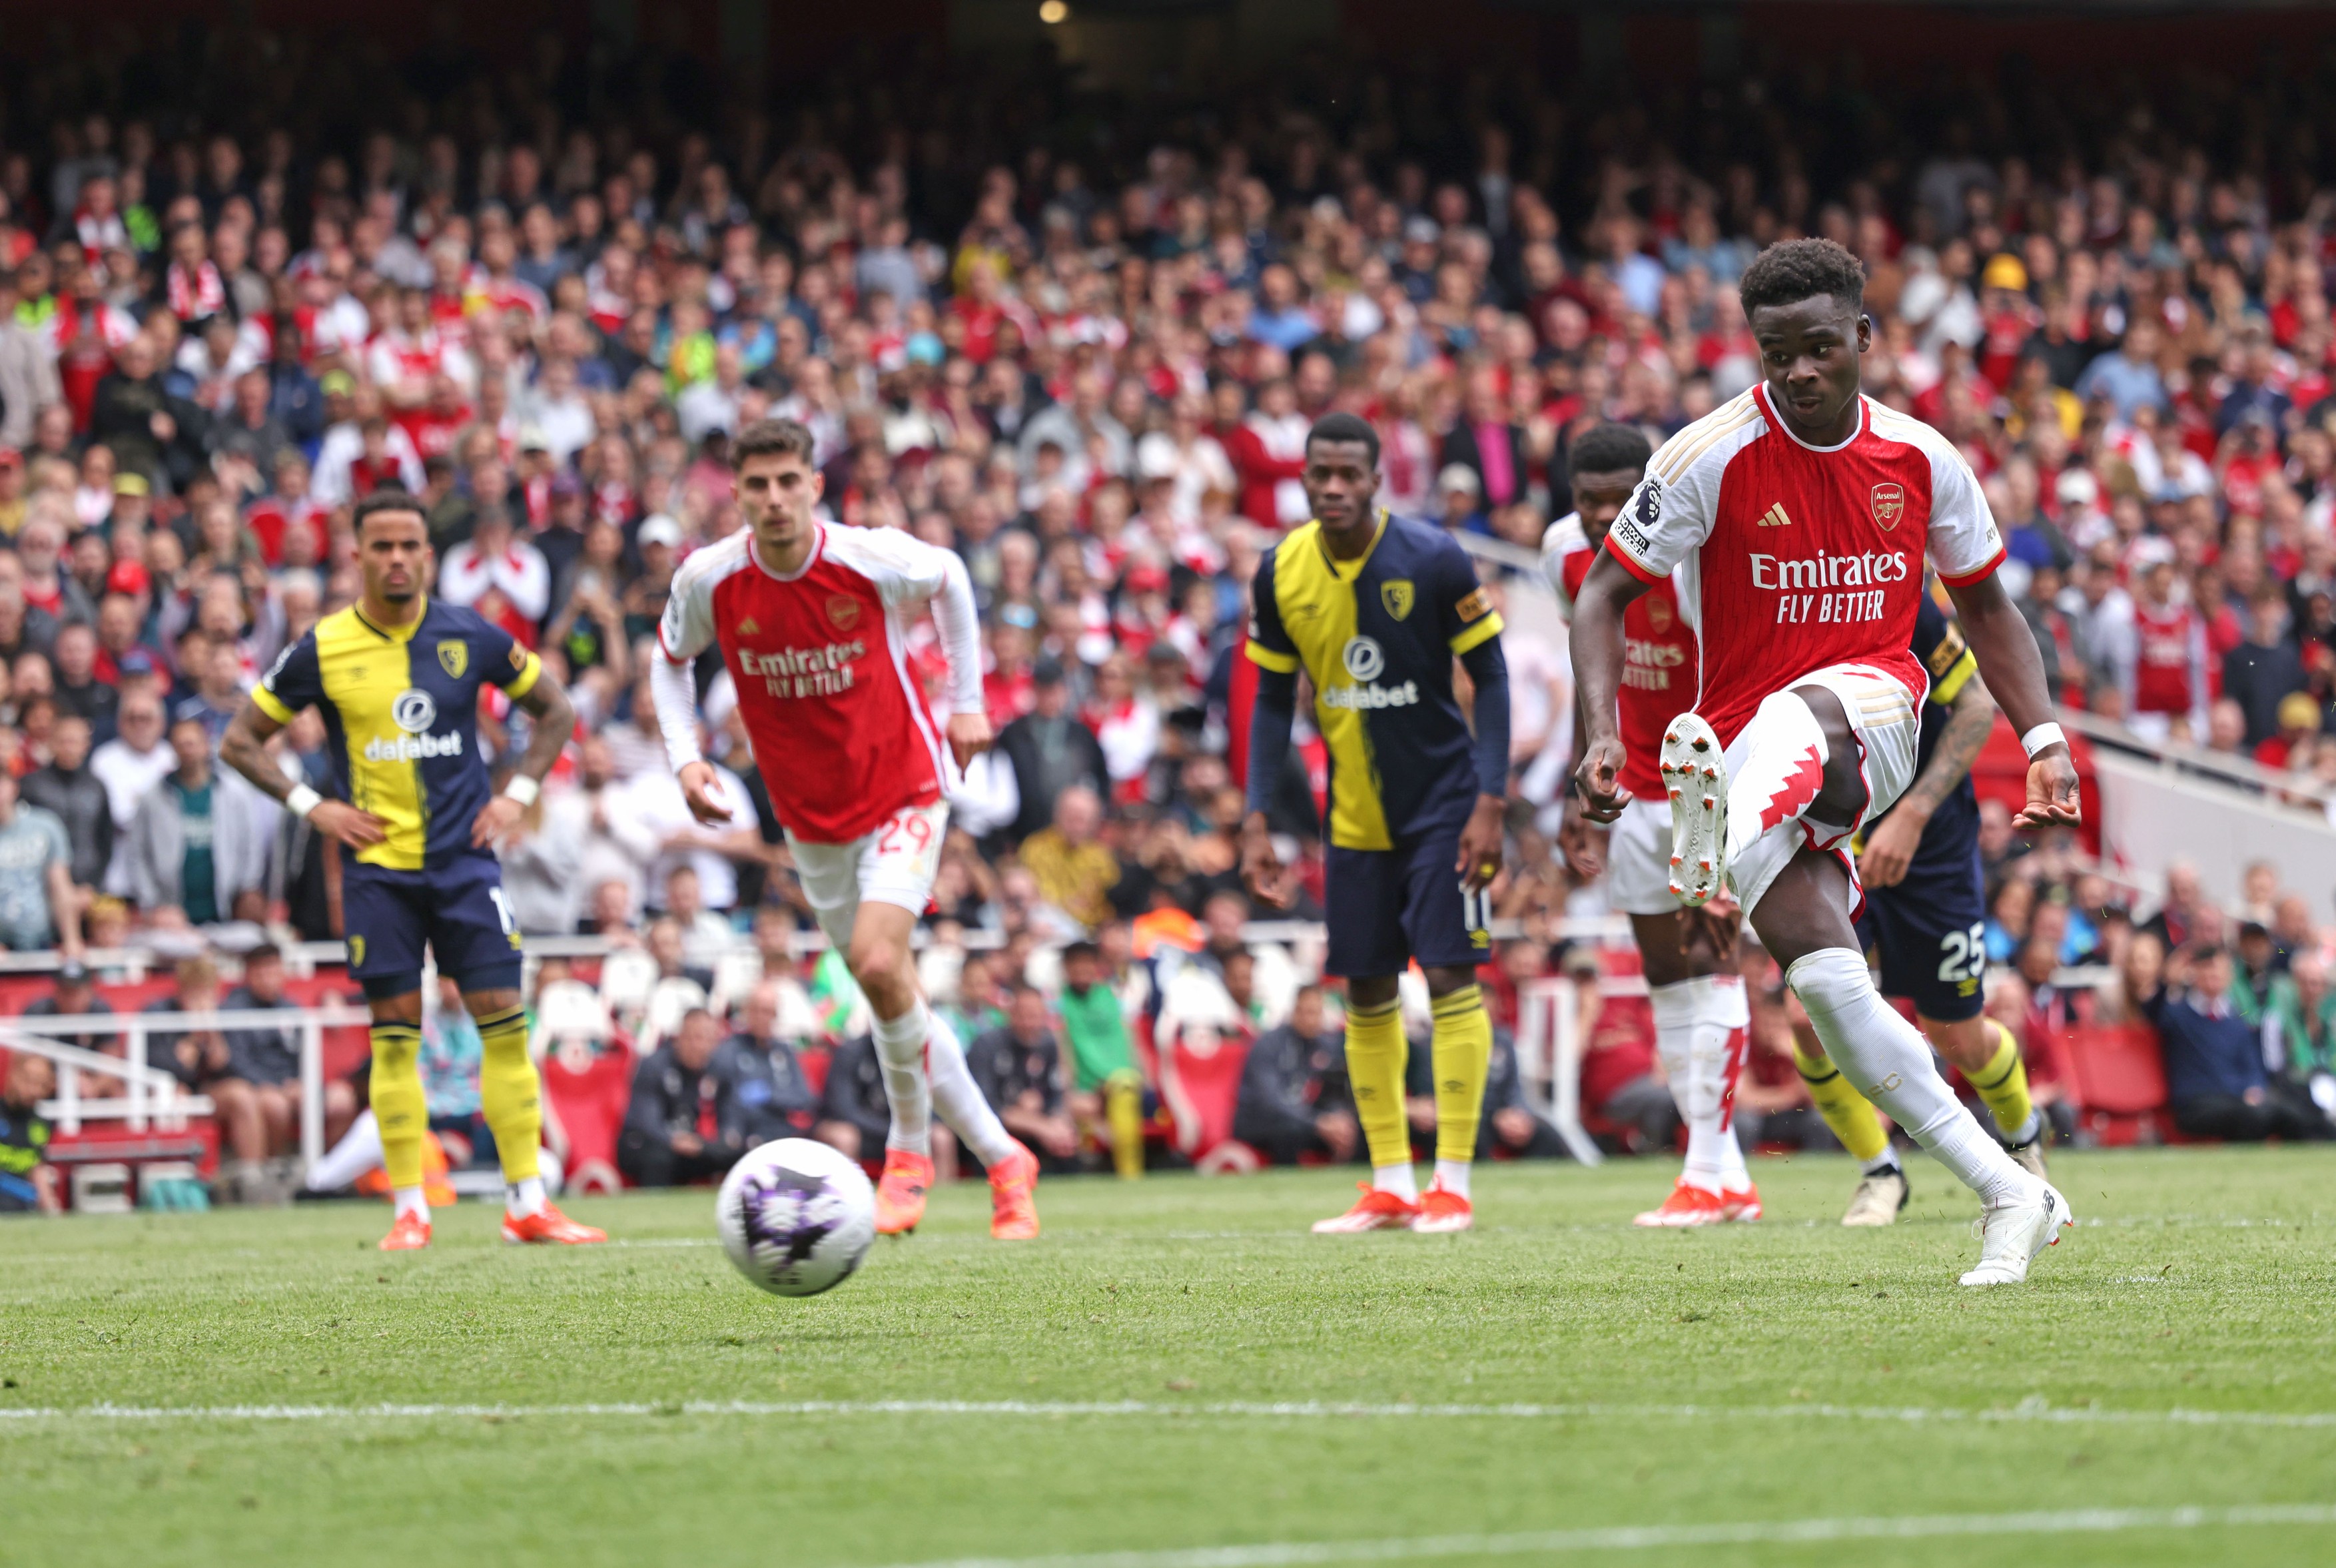 Arsenal - Bournemouth 1-0, ACUM, pe DGS 2. Bukayo Saka înscrie din penalty | Manchester City - Wolverhampton, 19:30, DGS 3